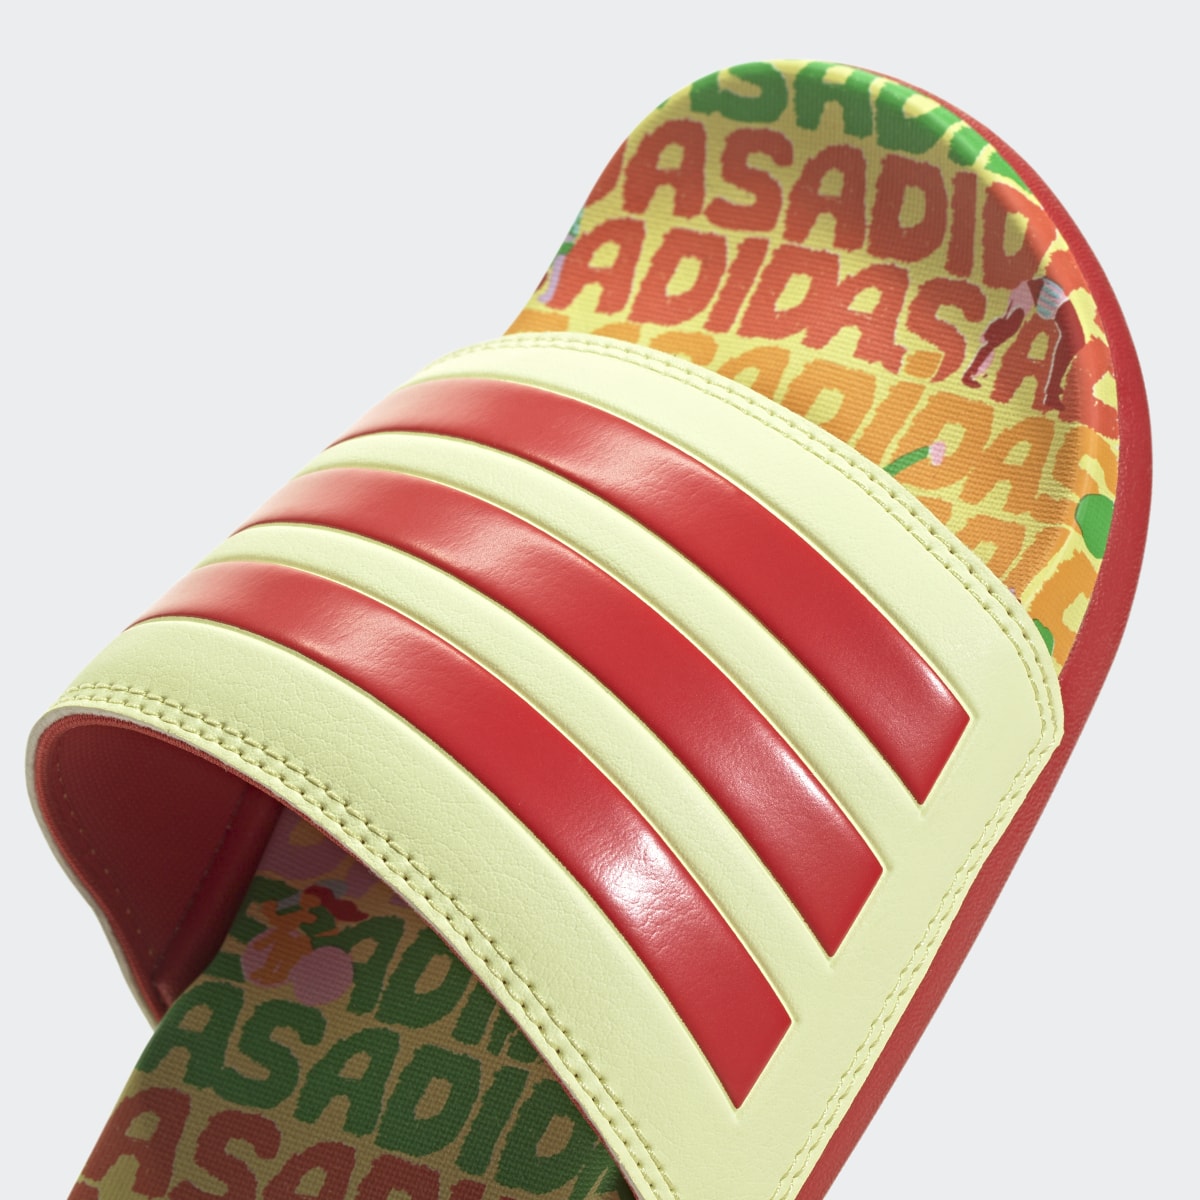 Adidas Adilette Comfort Sandals. 9